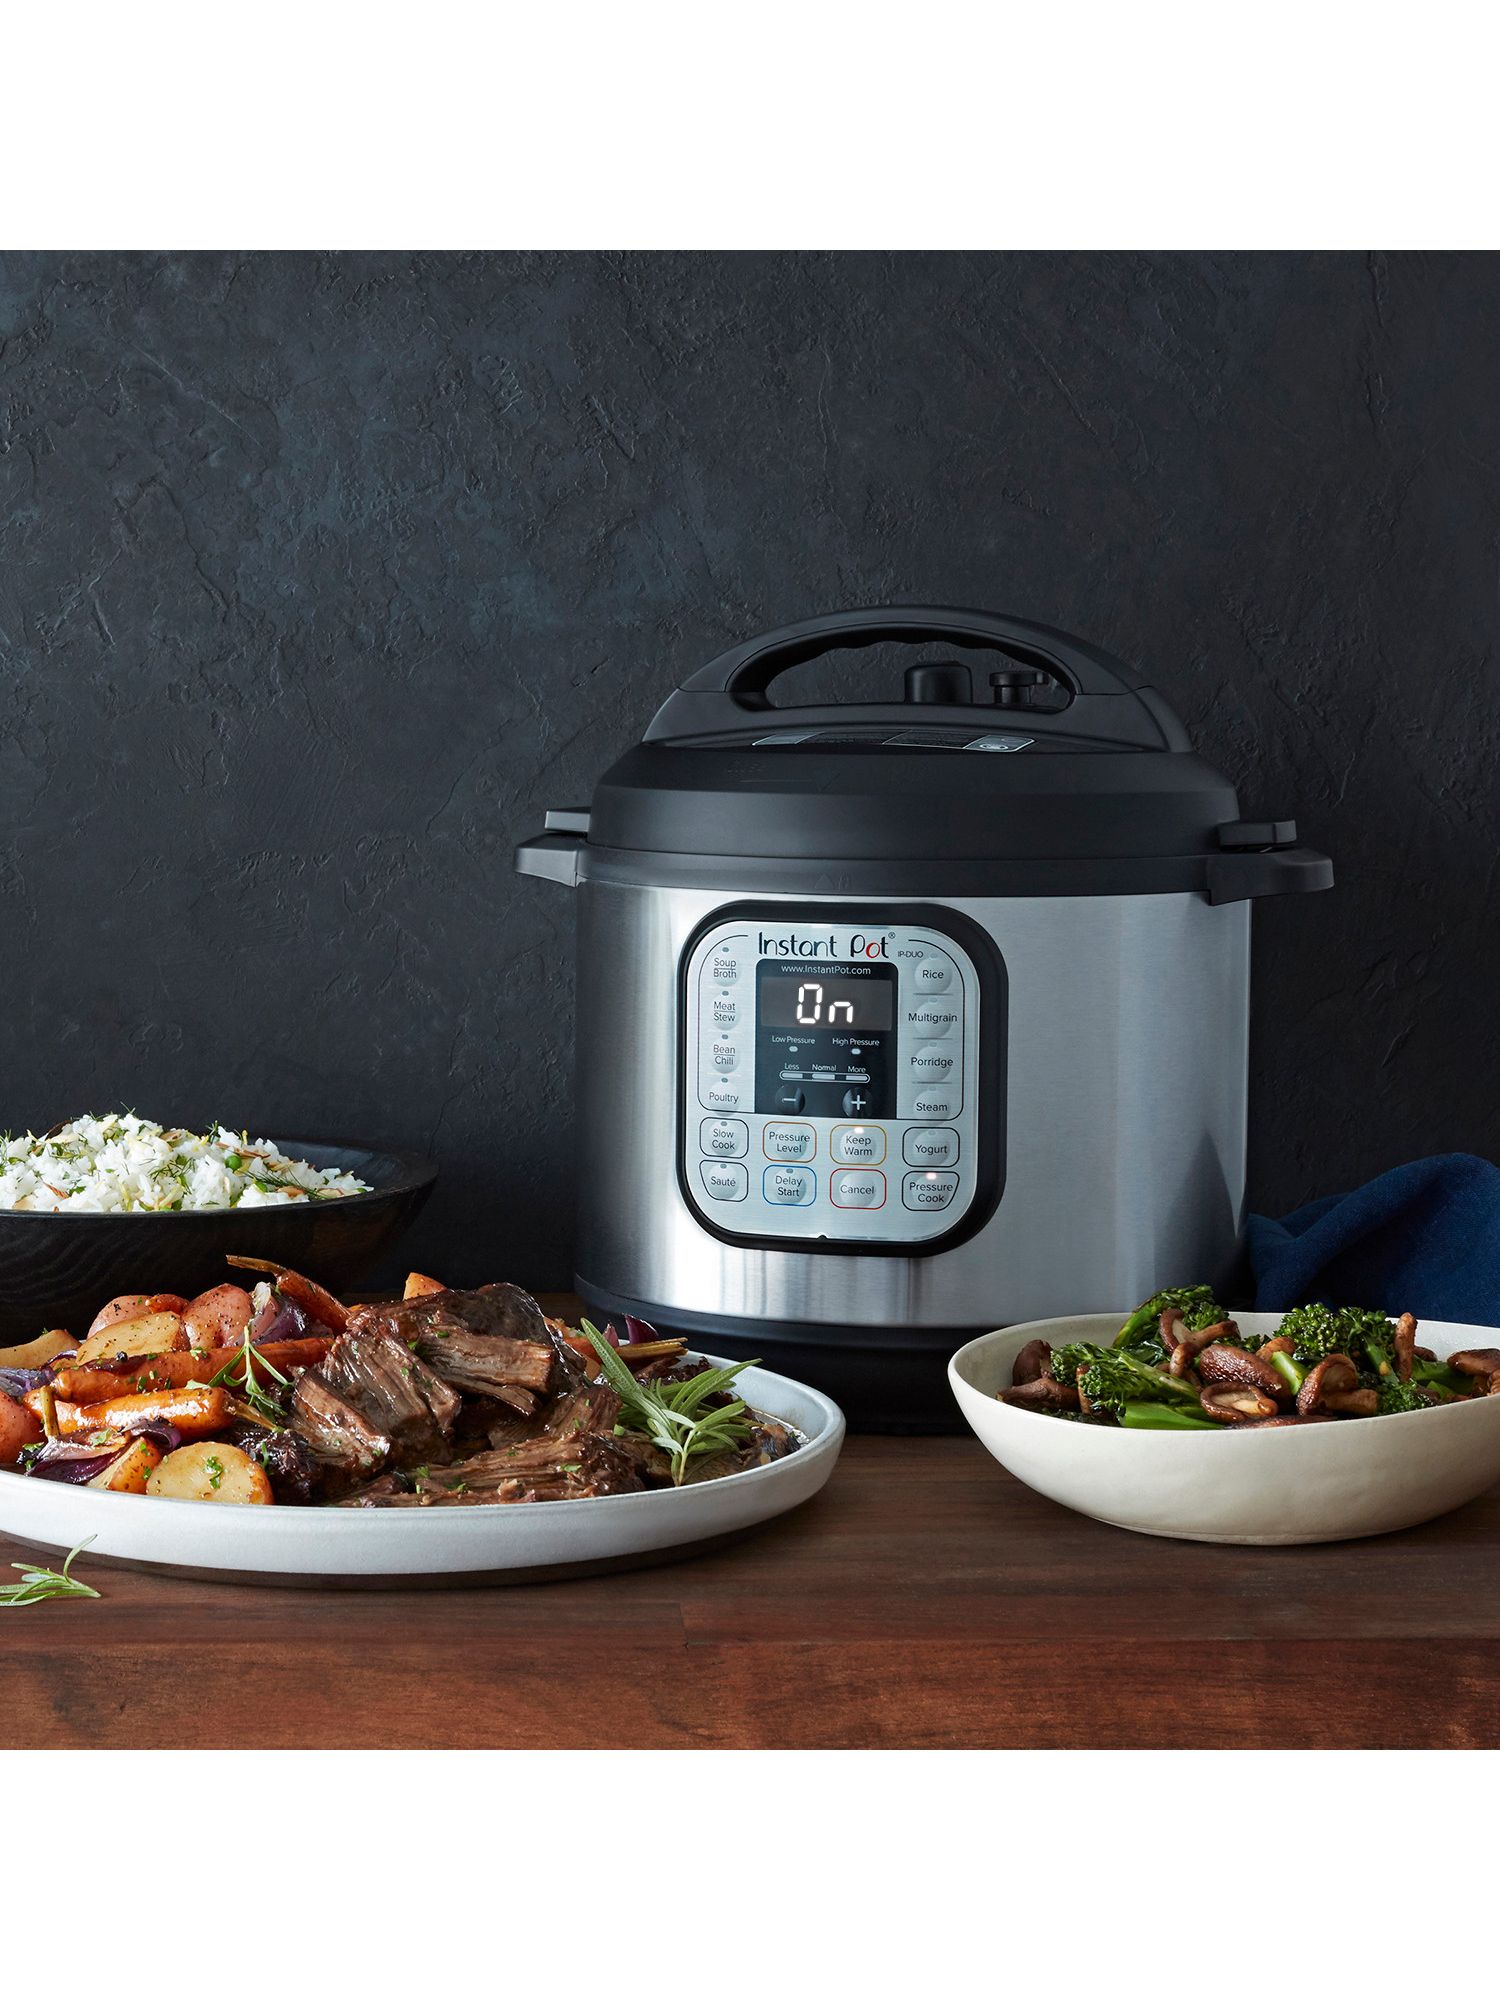 Best Buy: Instant Pot Duo 8 Quart 7-in-1 Multi-Use Pressure Cooker